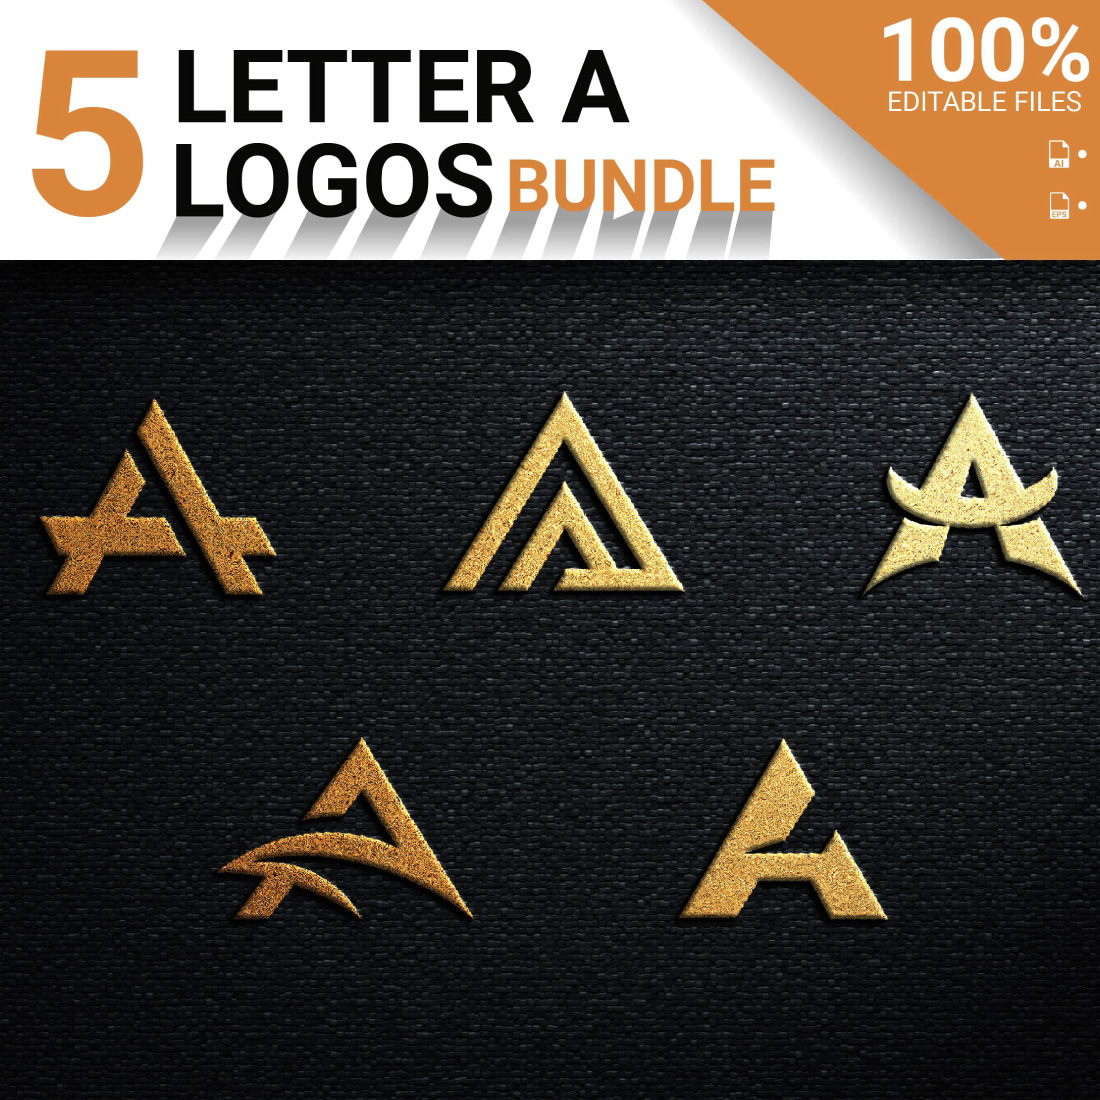 Logo Designs: Letter A Logo Bundle cover image.